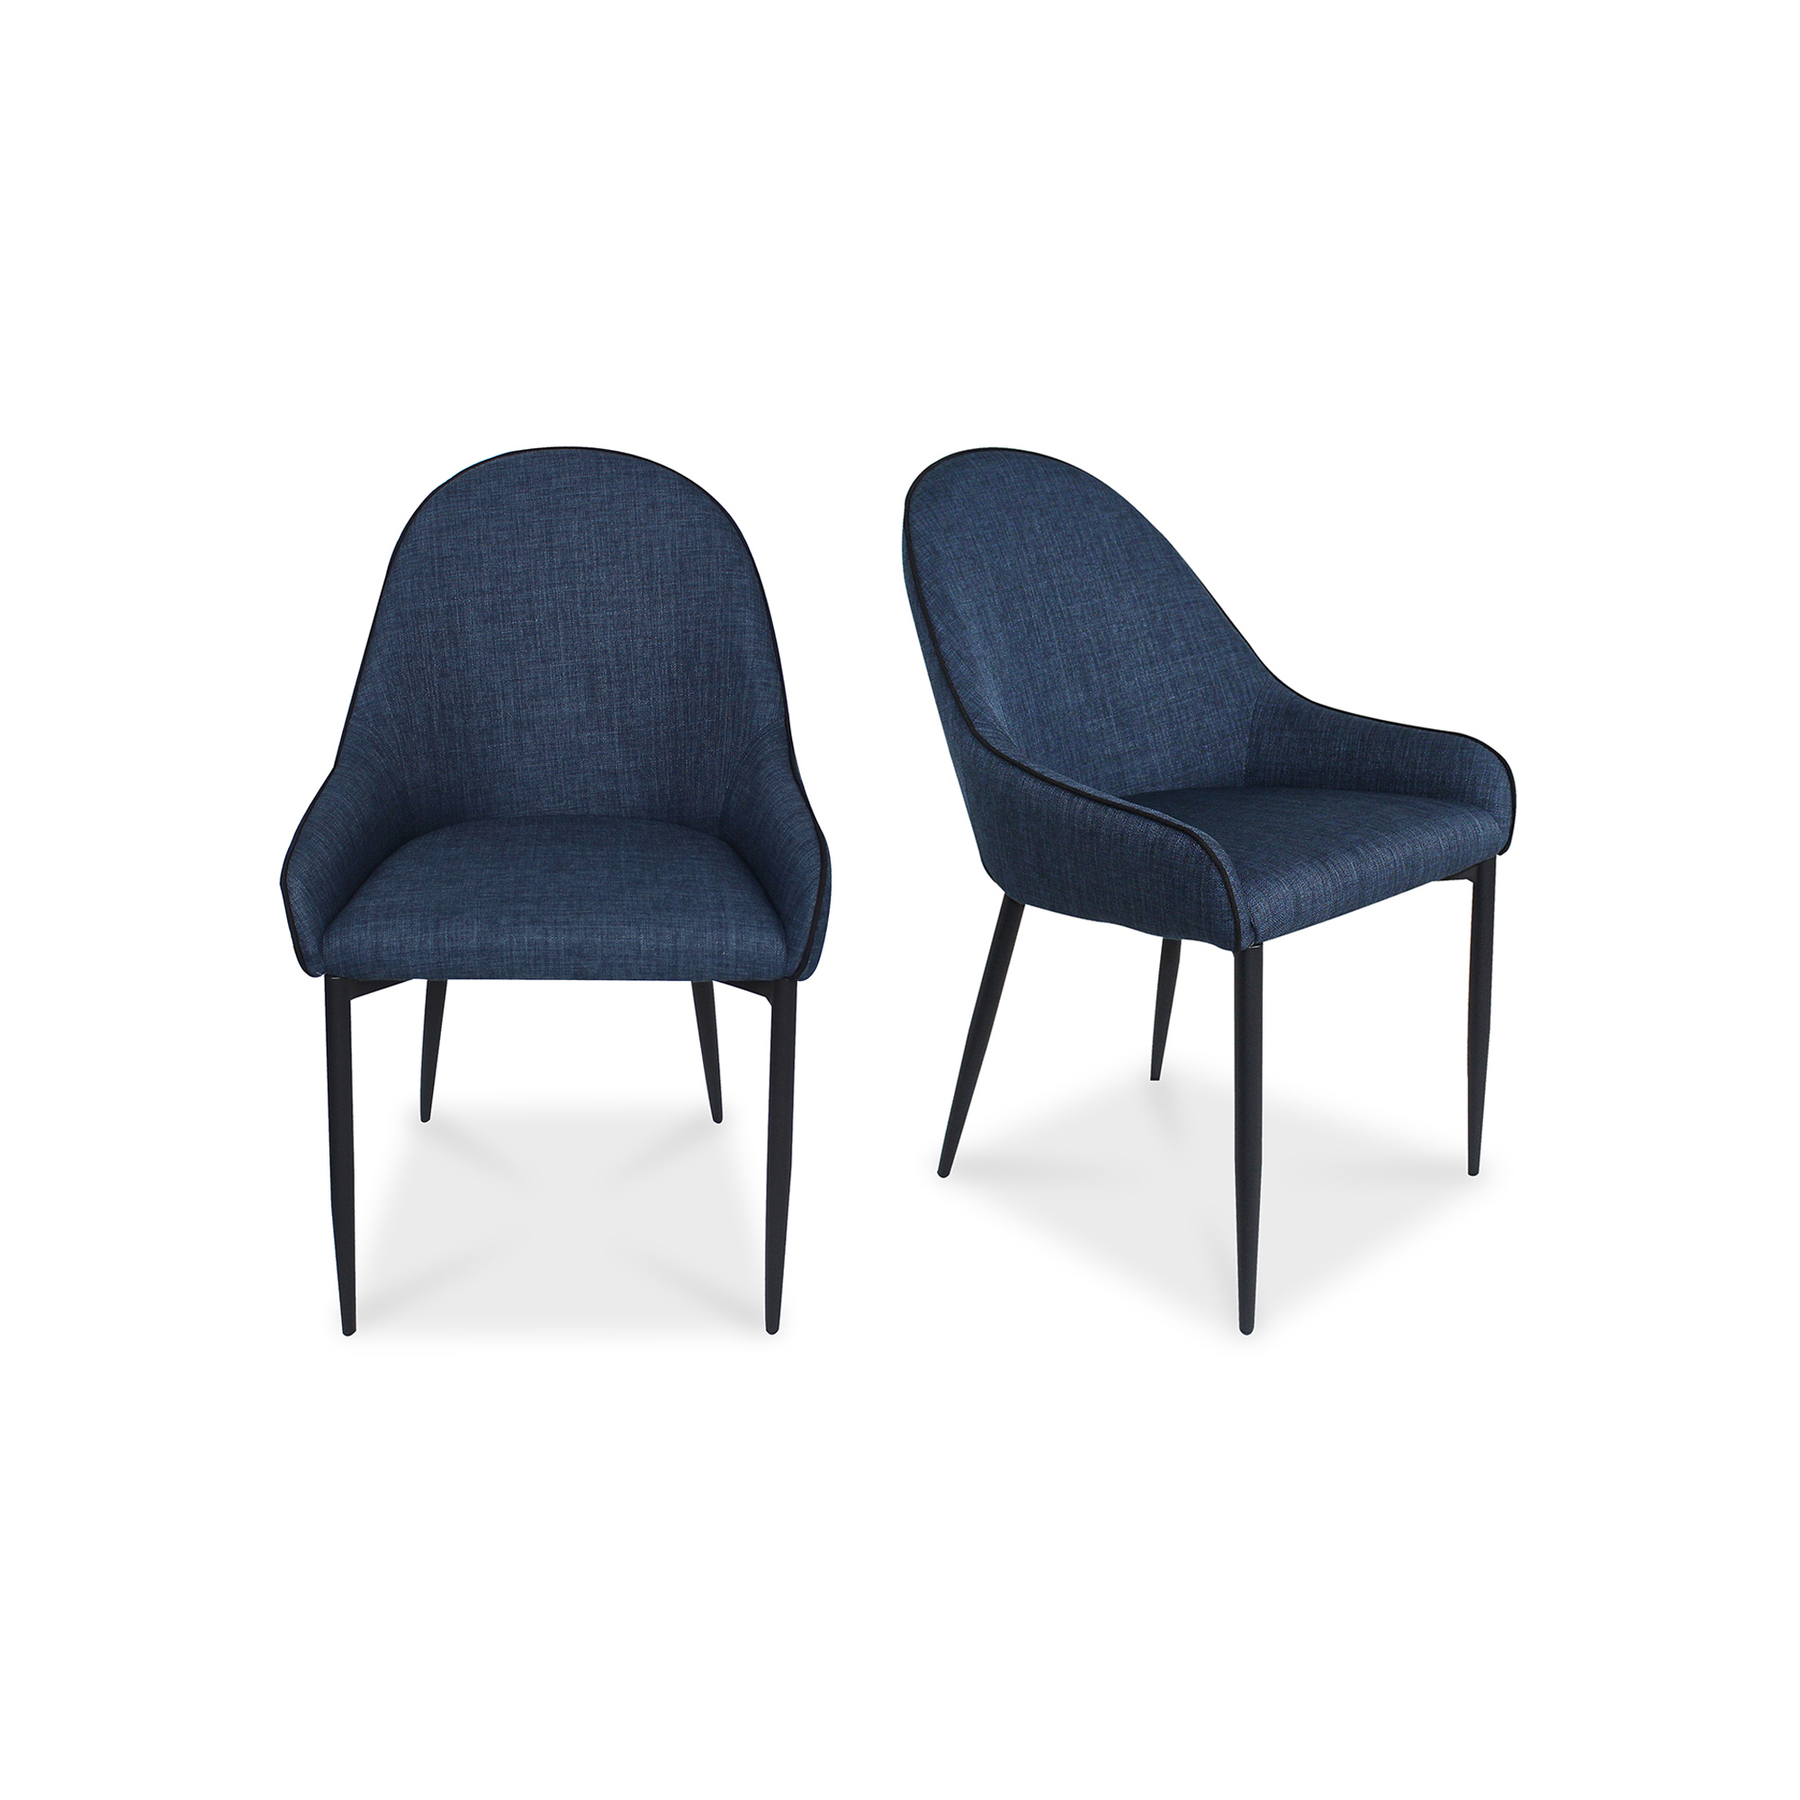 Shop Lapis Dining Chair Dark Blue Set of 2 | Burke Decor